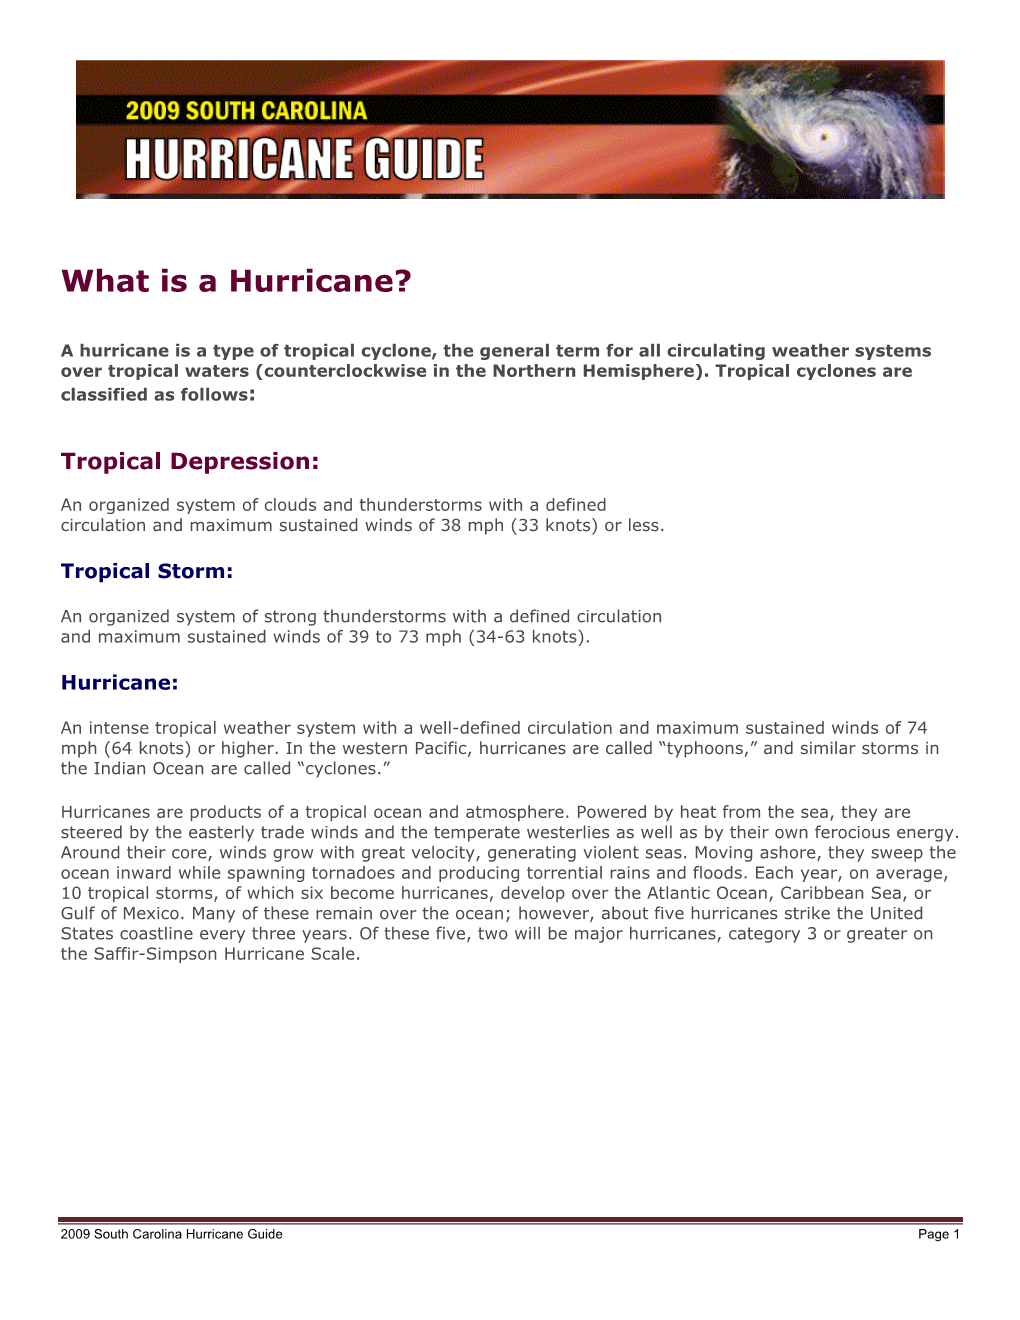 2009 South Carolina Hurricane Guide Page 1 Hurricane Watches and Warnings